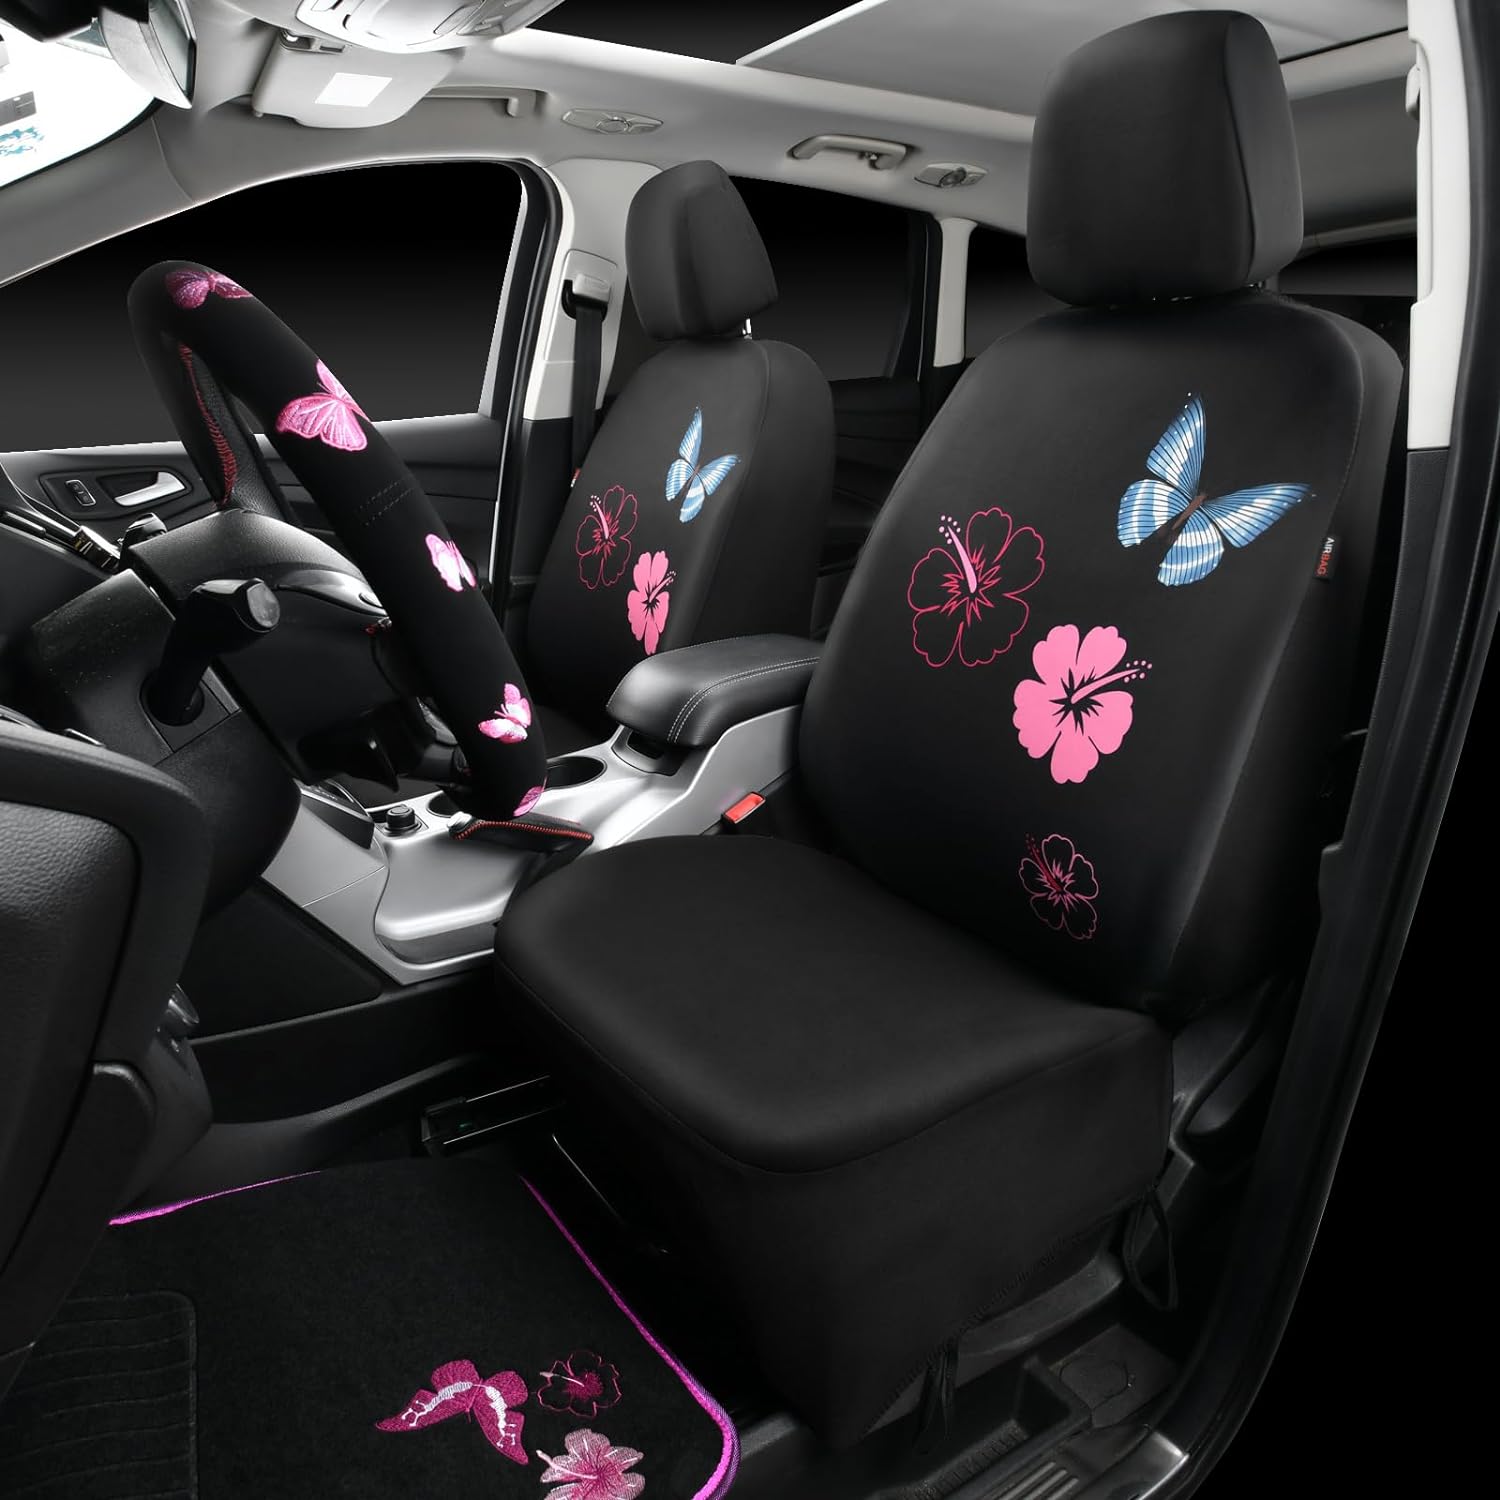 CAR PASS Embroidery Butterfly and Flower Car Floor Mats, Pink Car Floor Mats Universal Fit 95% Automotive,SUVS,Sedan,Vans,for Cute Women,Girly,Set of 4